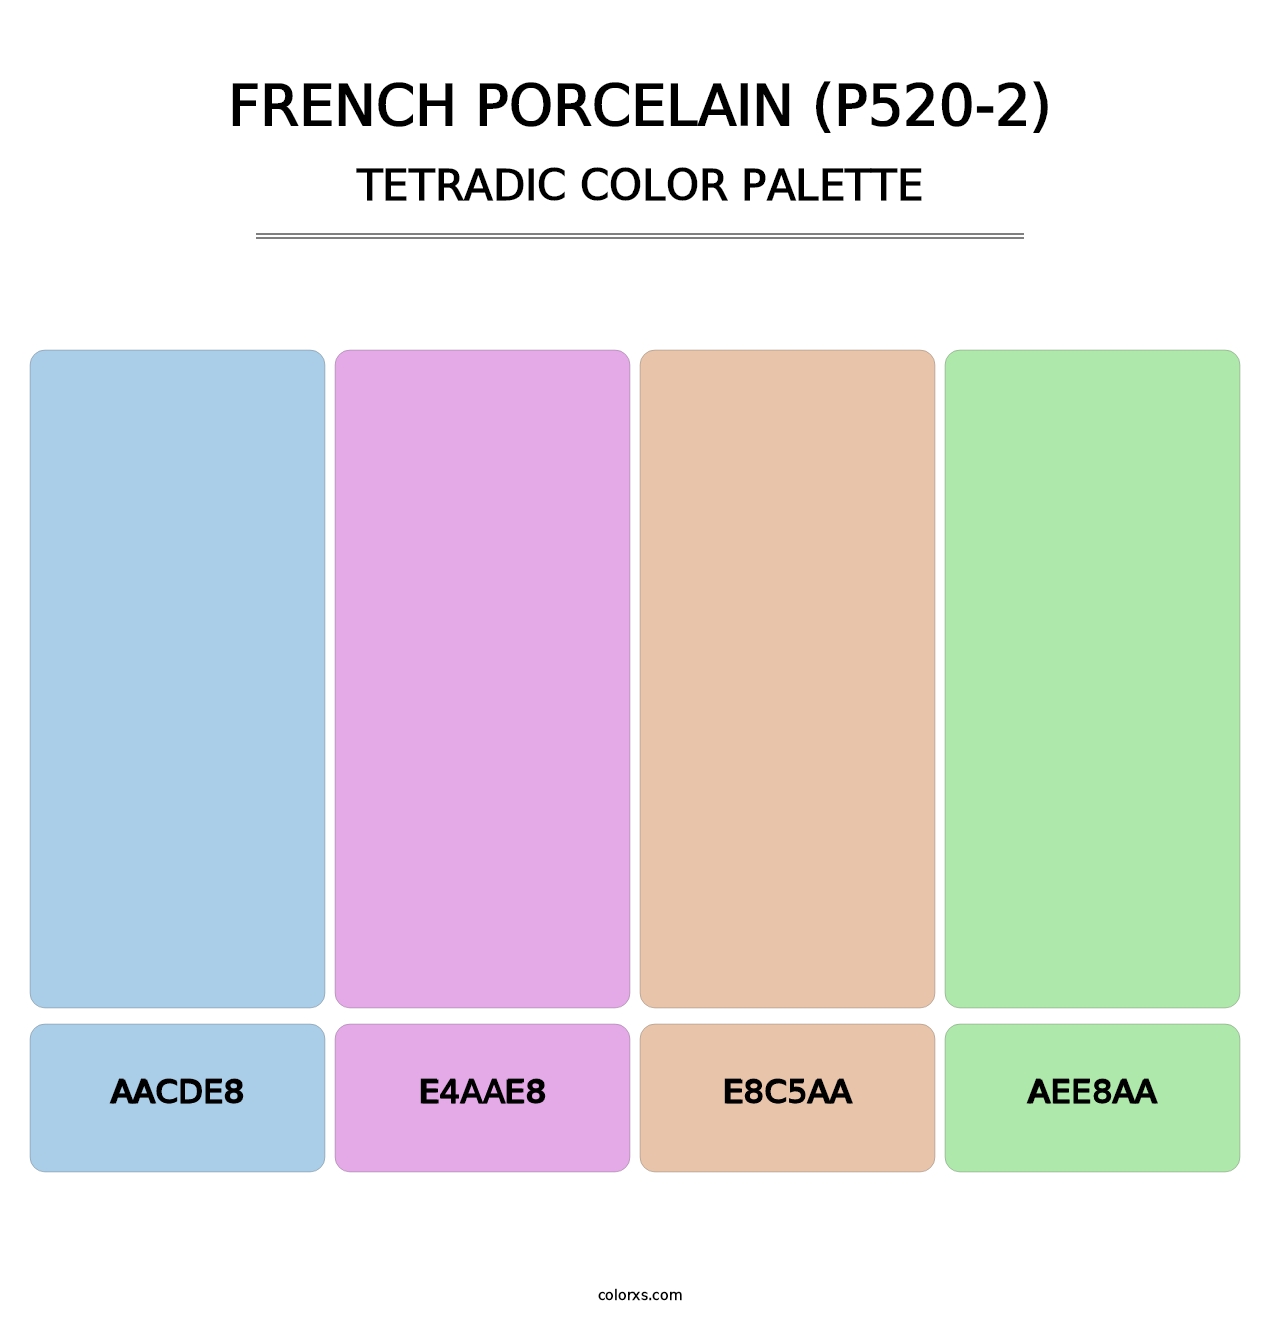 French Porcelain (P520-2) - Tetradic Color Palette